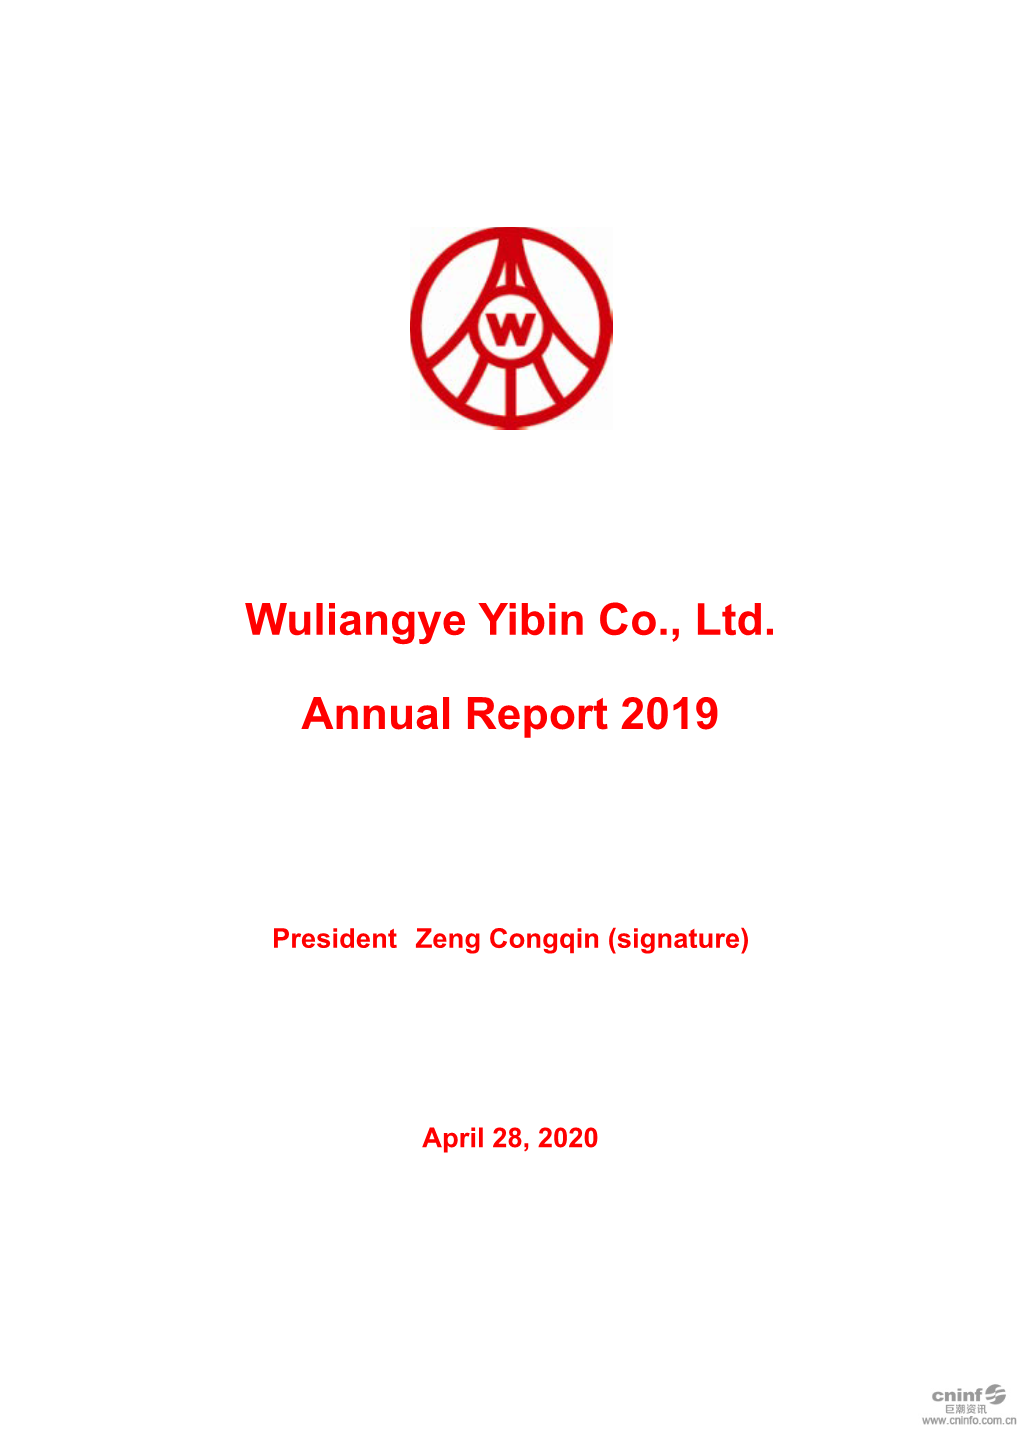 Wuliangye Yibin Co., Ltd. Annual Report 2019